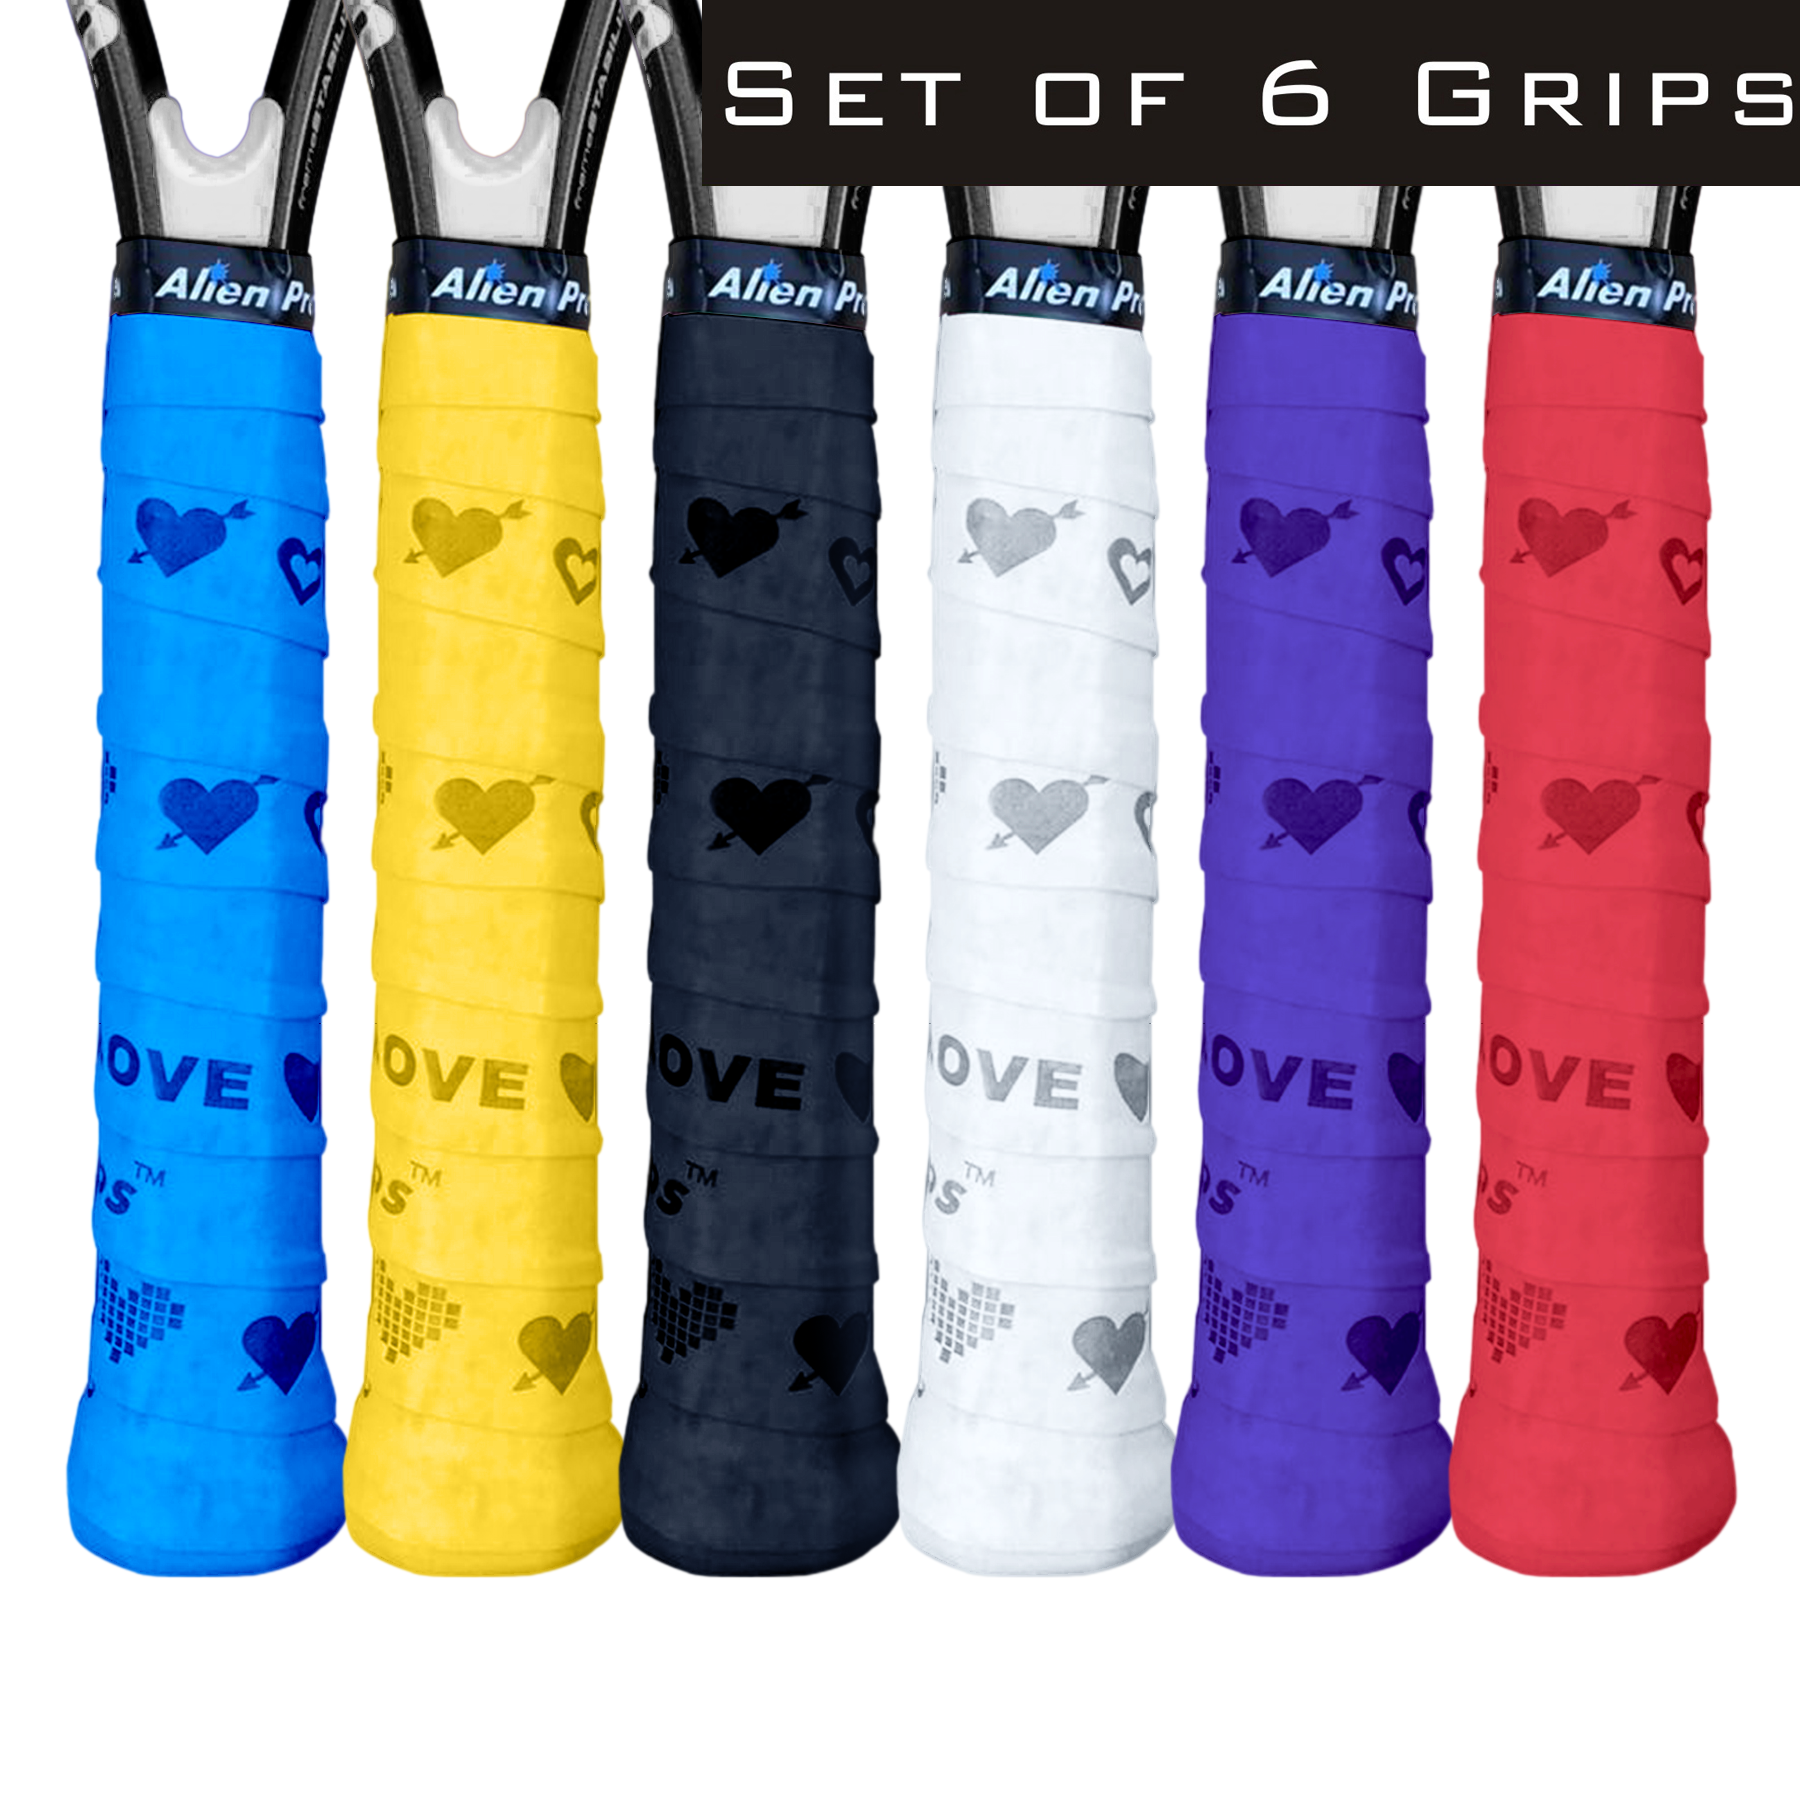 XPOOP 5pcs Badminton Grip, Ruban Grip pour Raquette, Raquette Grip,  Raquette Grip Ruban, PU Grip Tennis Anti Slip, Racket Grip, Recouvrez Votre